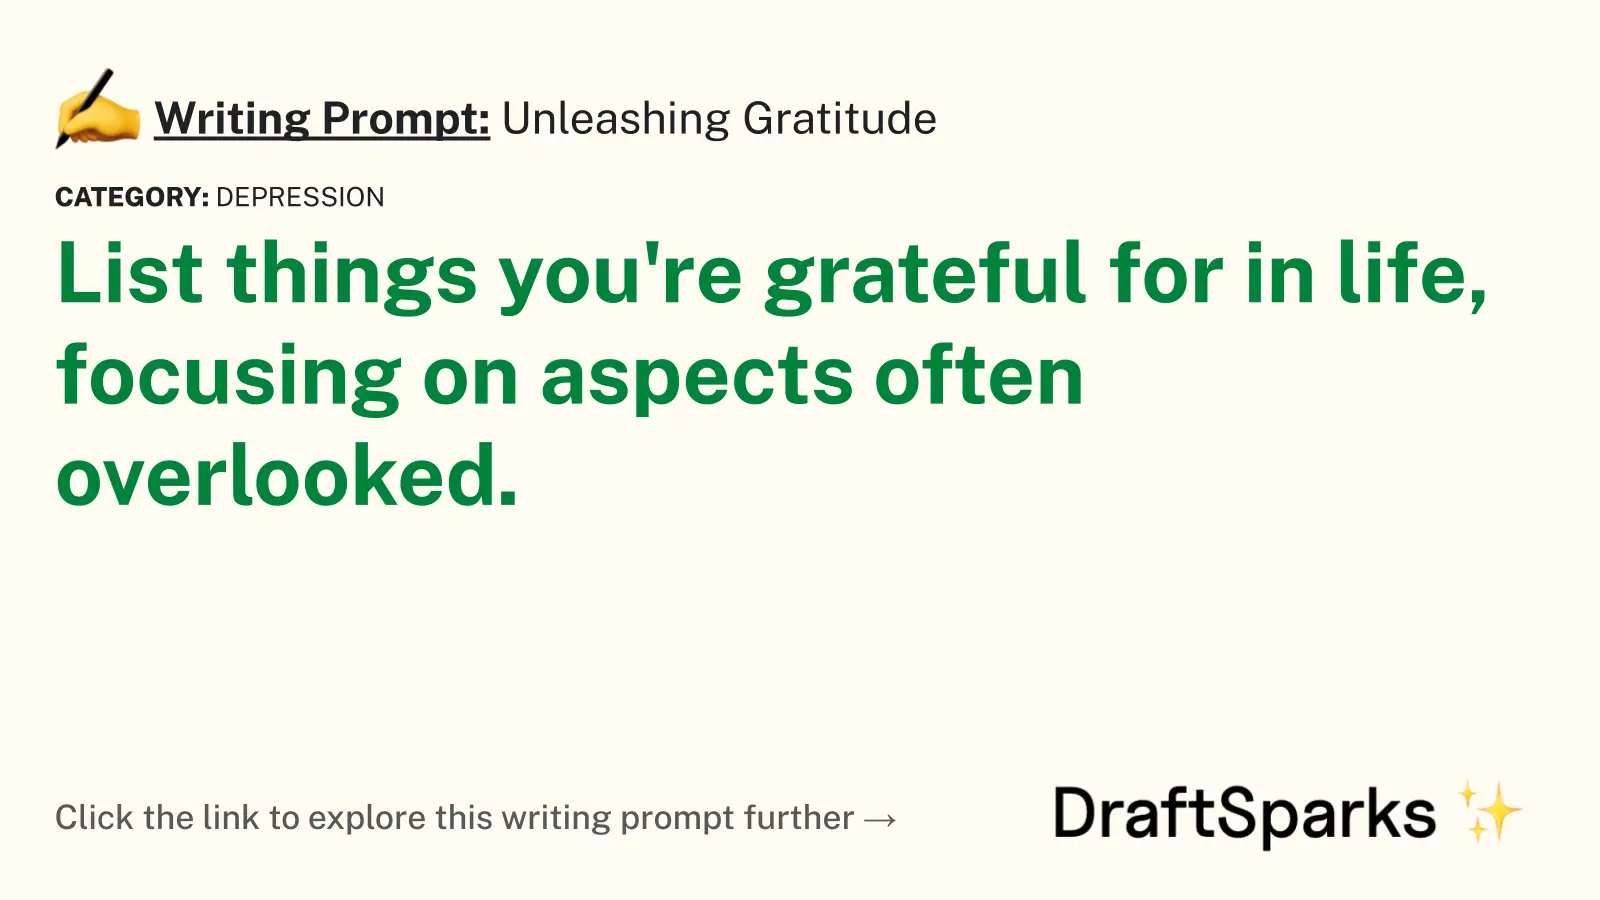 Unleashing Gratitude